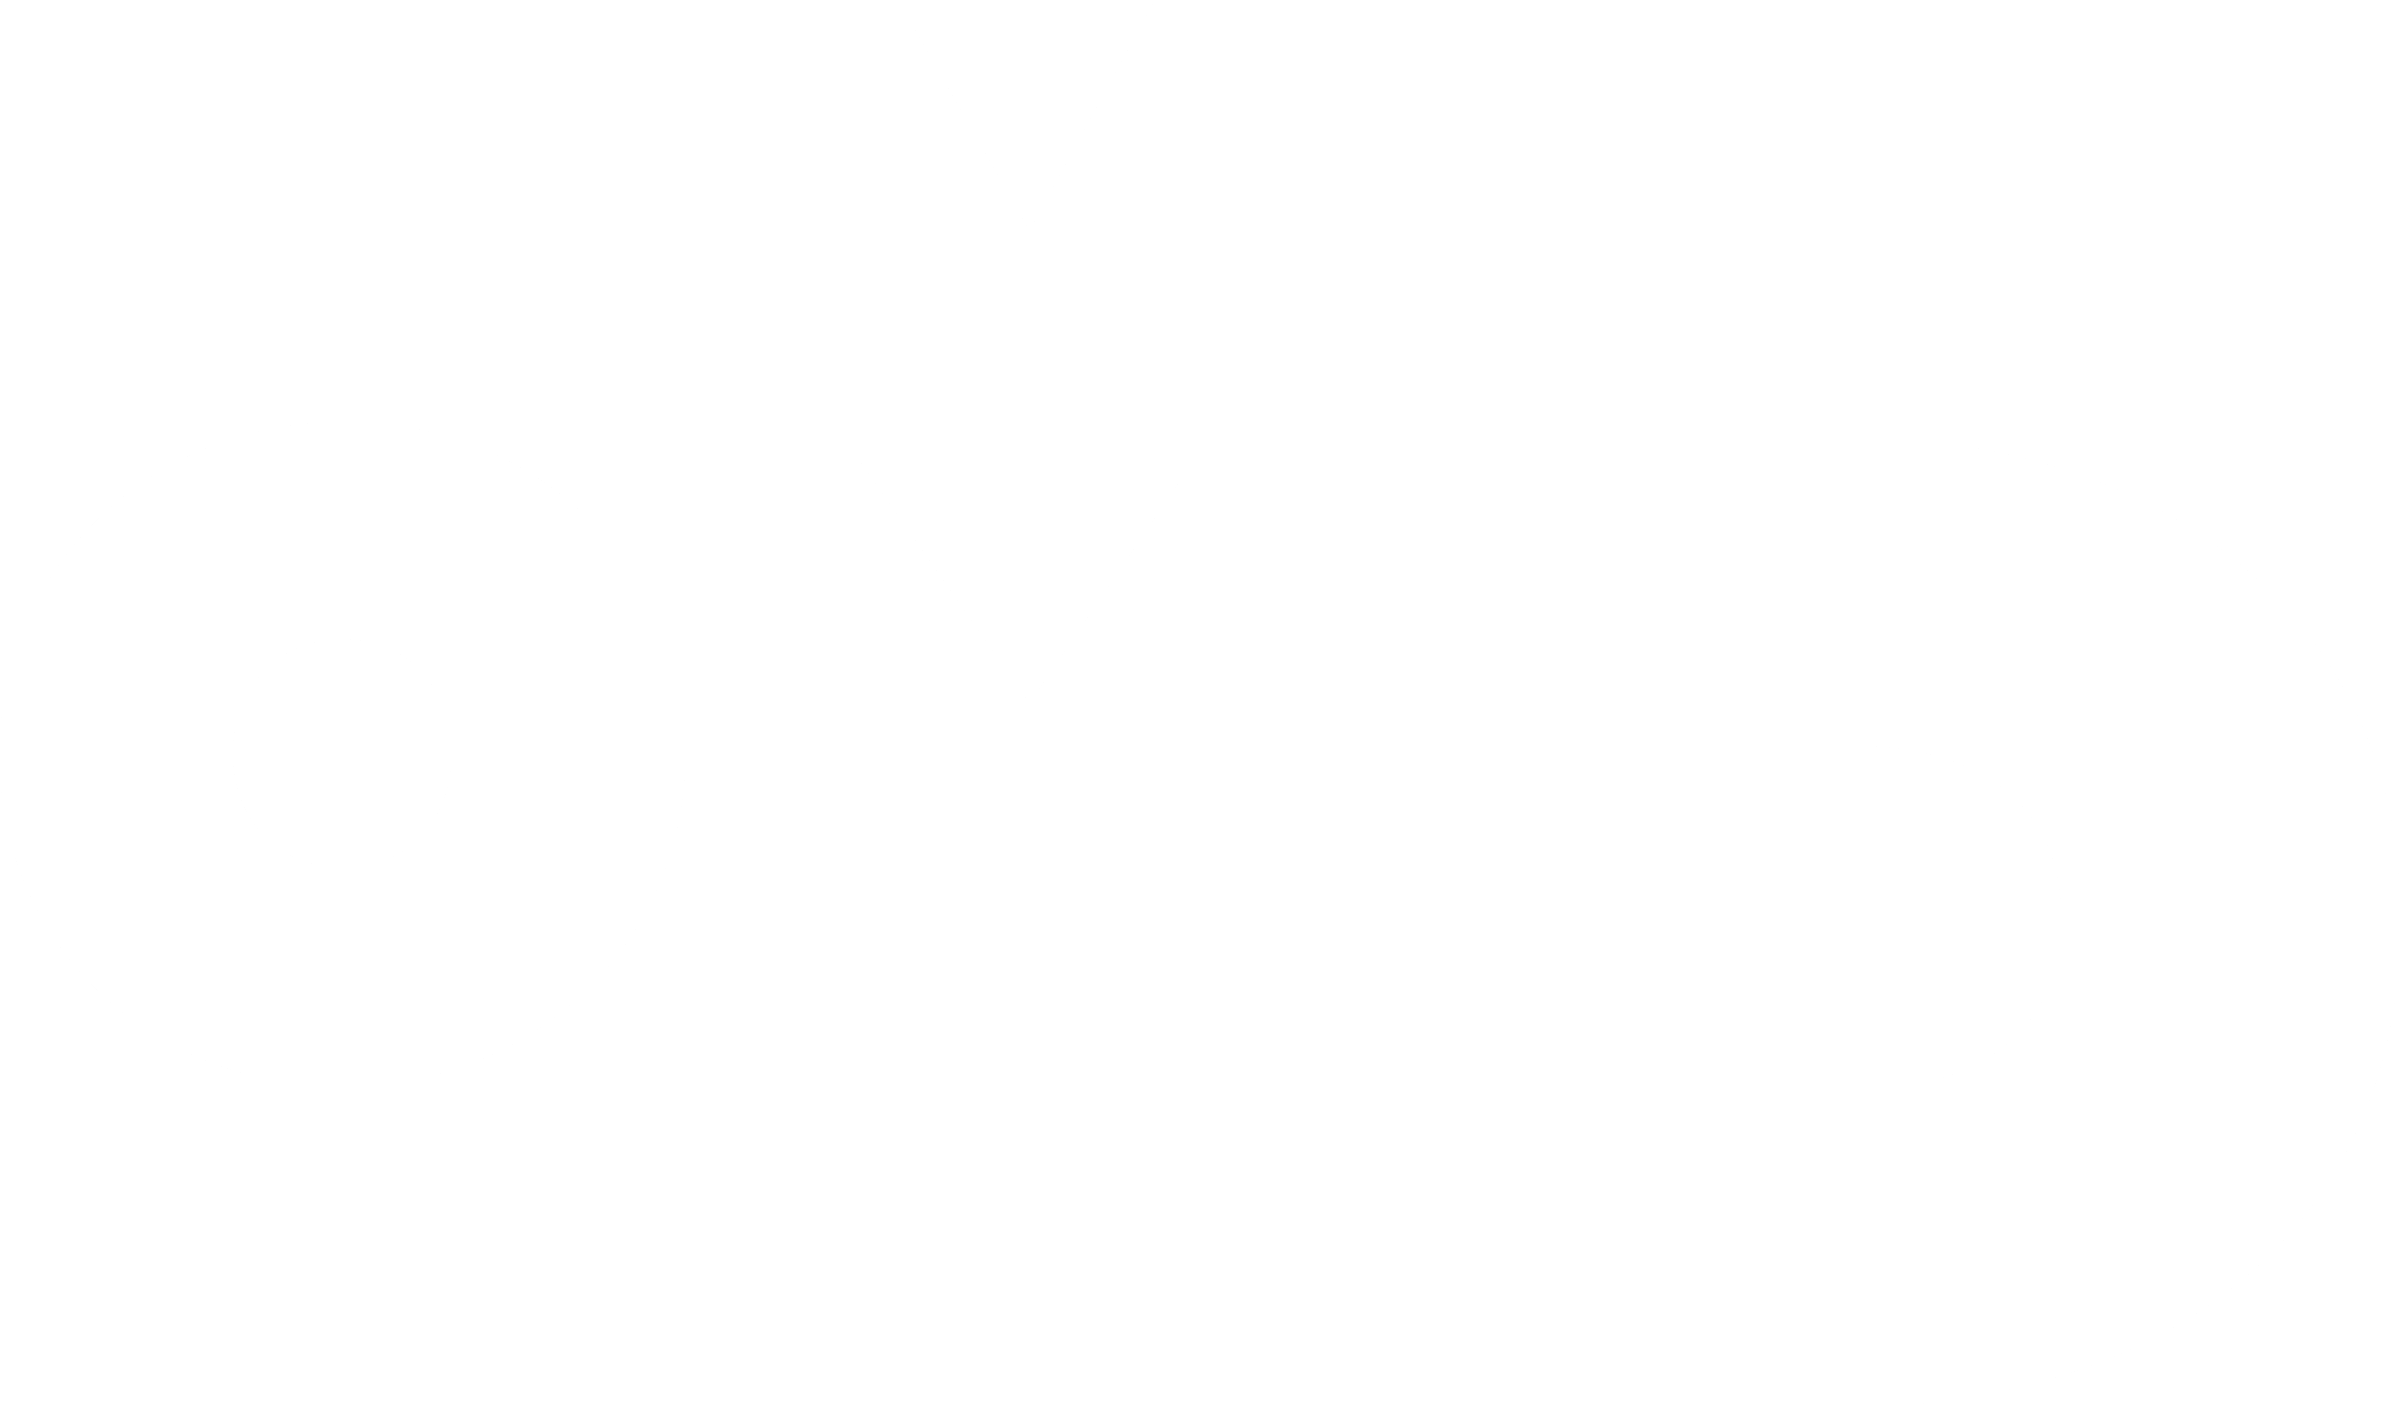 omd-logo-black-and-white